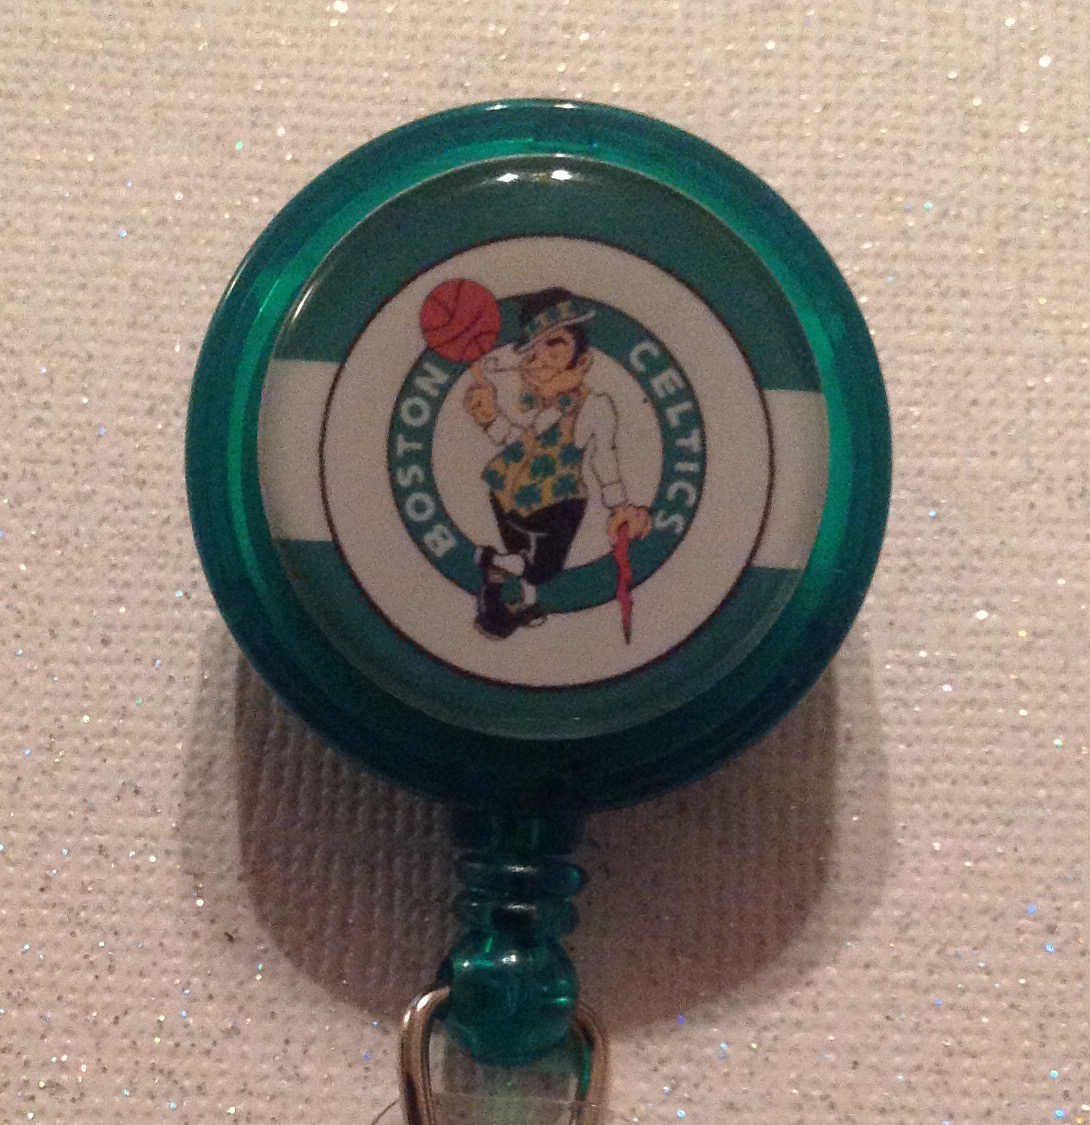 Nba Boston Celtics Badge Reel Id Holder Green Alligator Clip Handmade New - $8.99